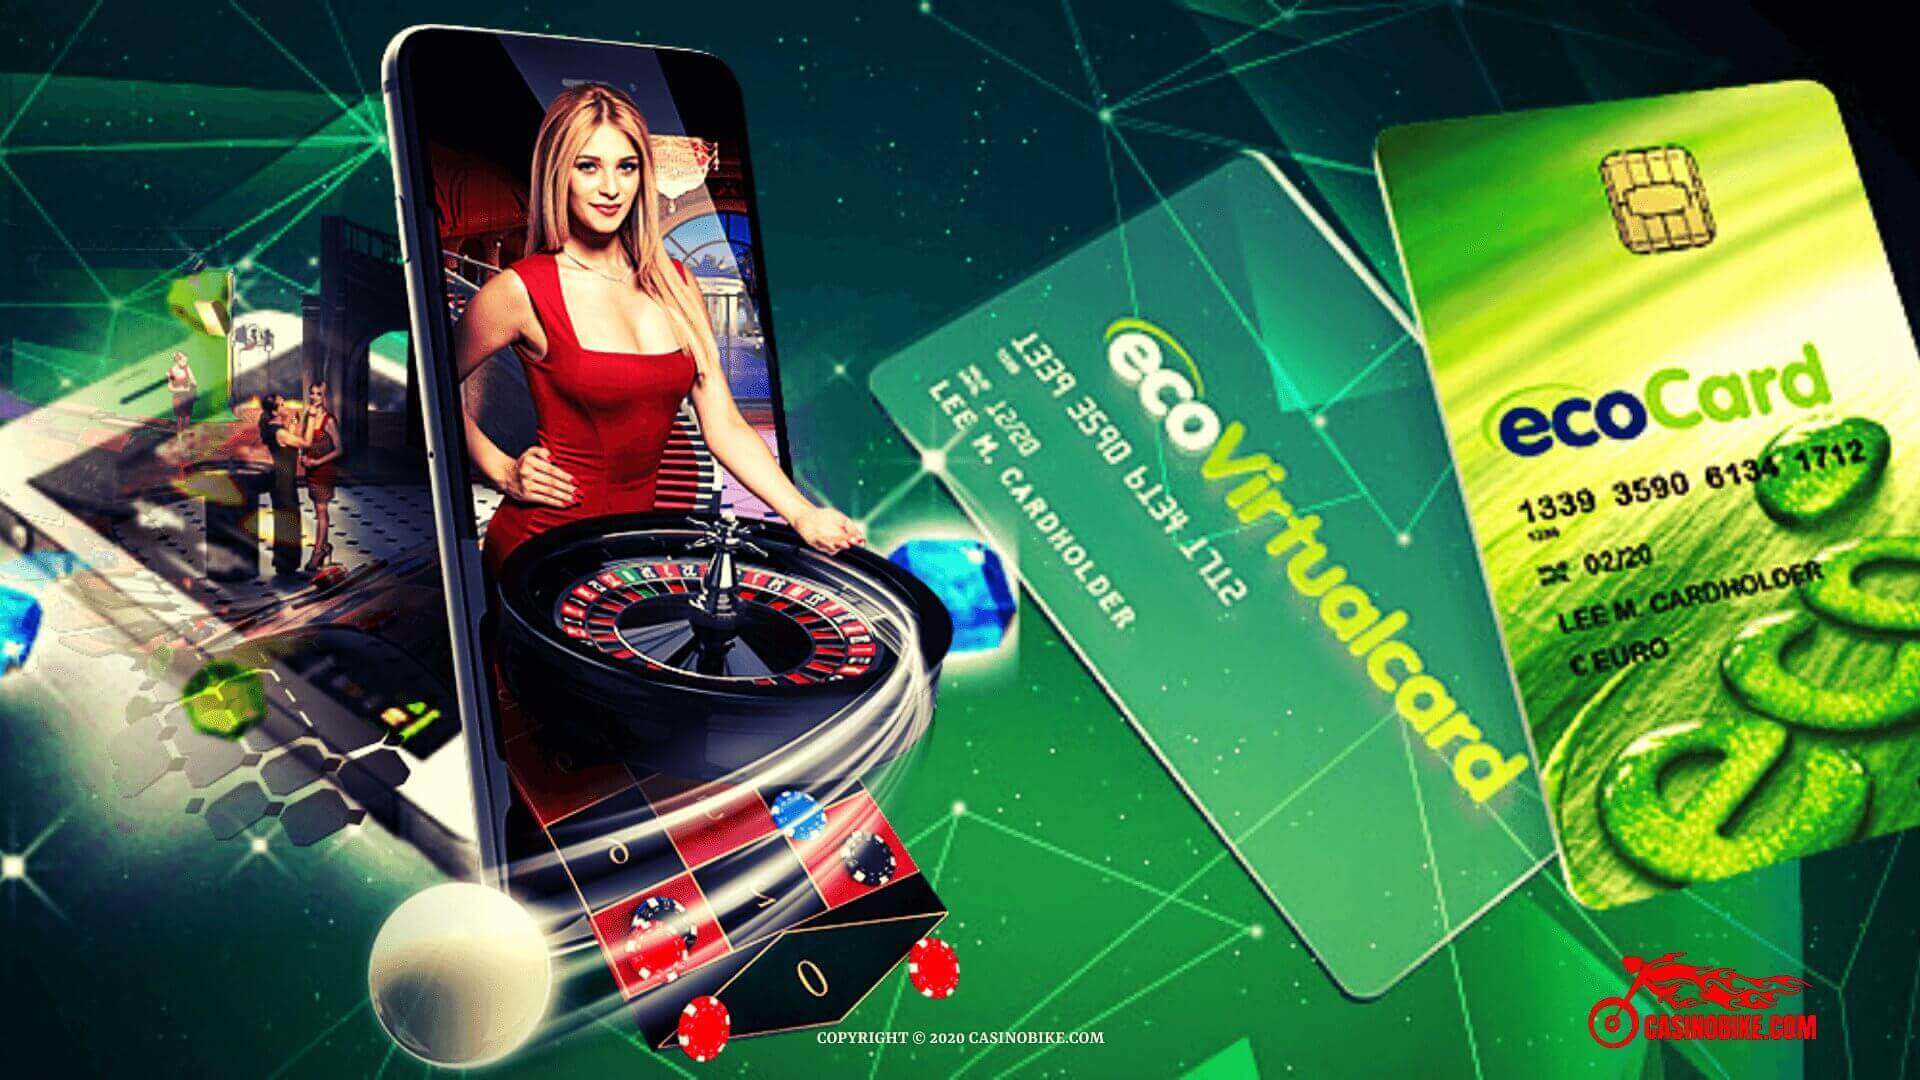 EcoCard Casinos 2020 Online Casinos Accepting EcoCard